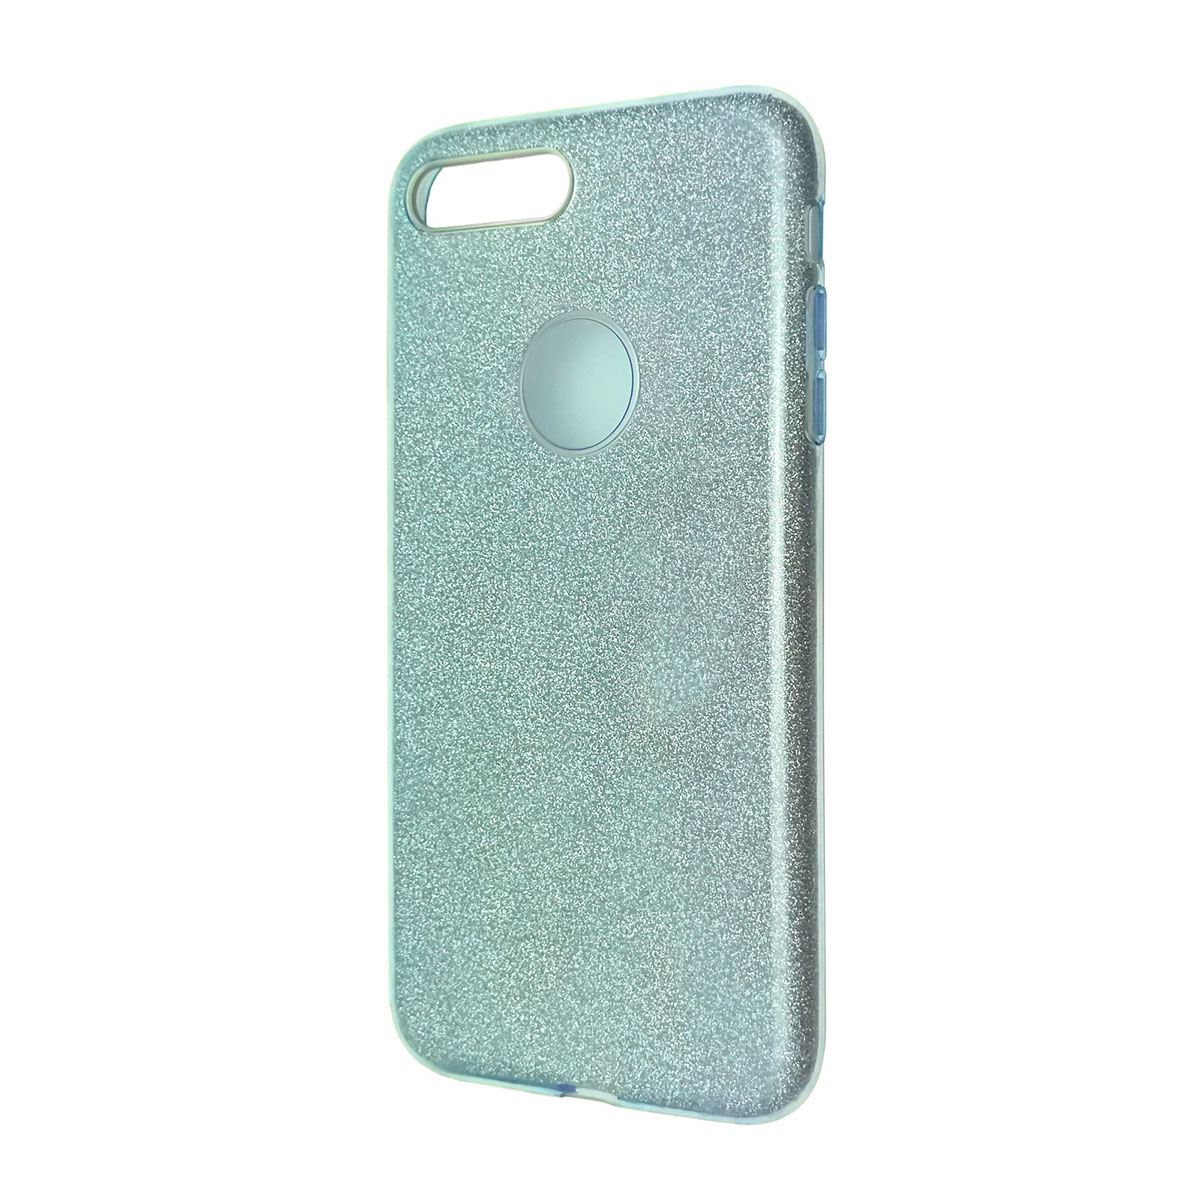 Чехол накладка для APPLE iPhone 7 Plus, силикон, блестки, цвет голубой.